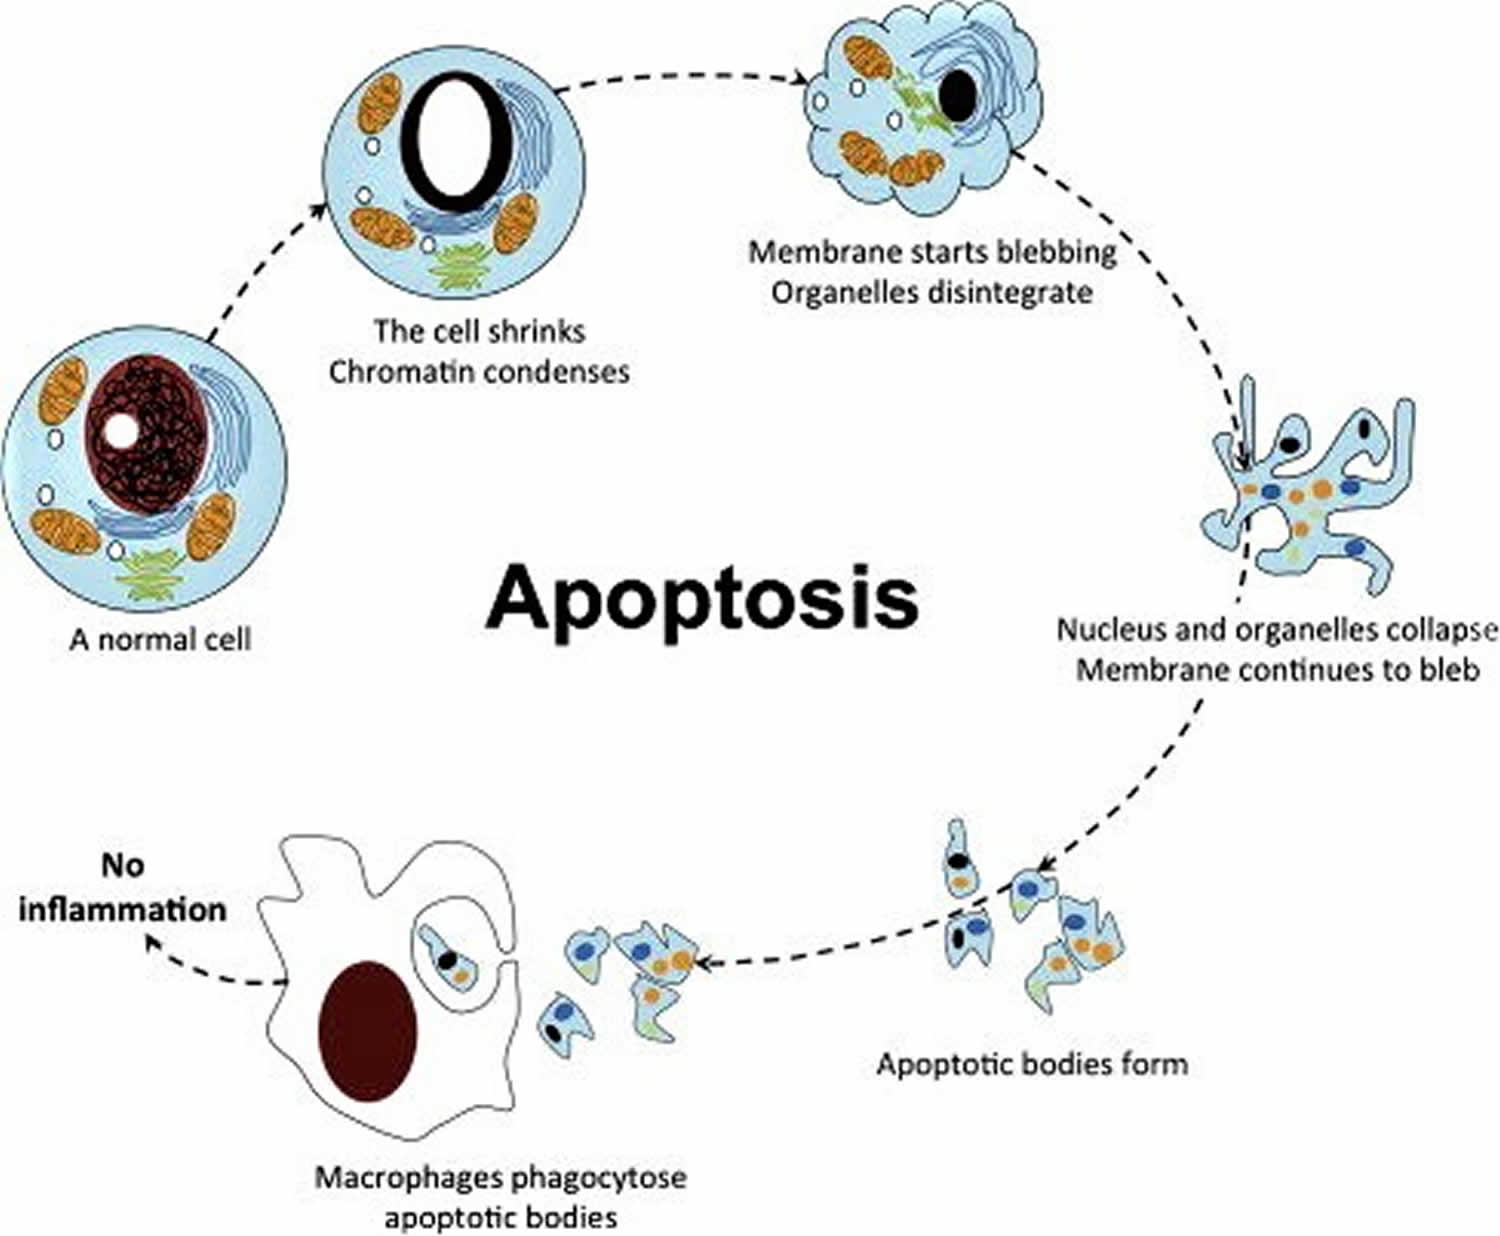 essay on apoptosis